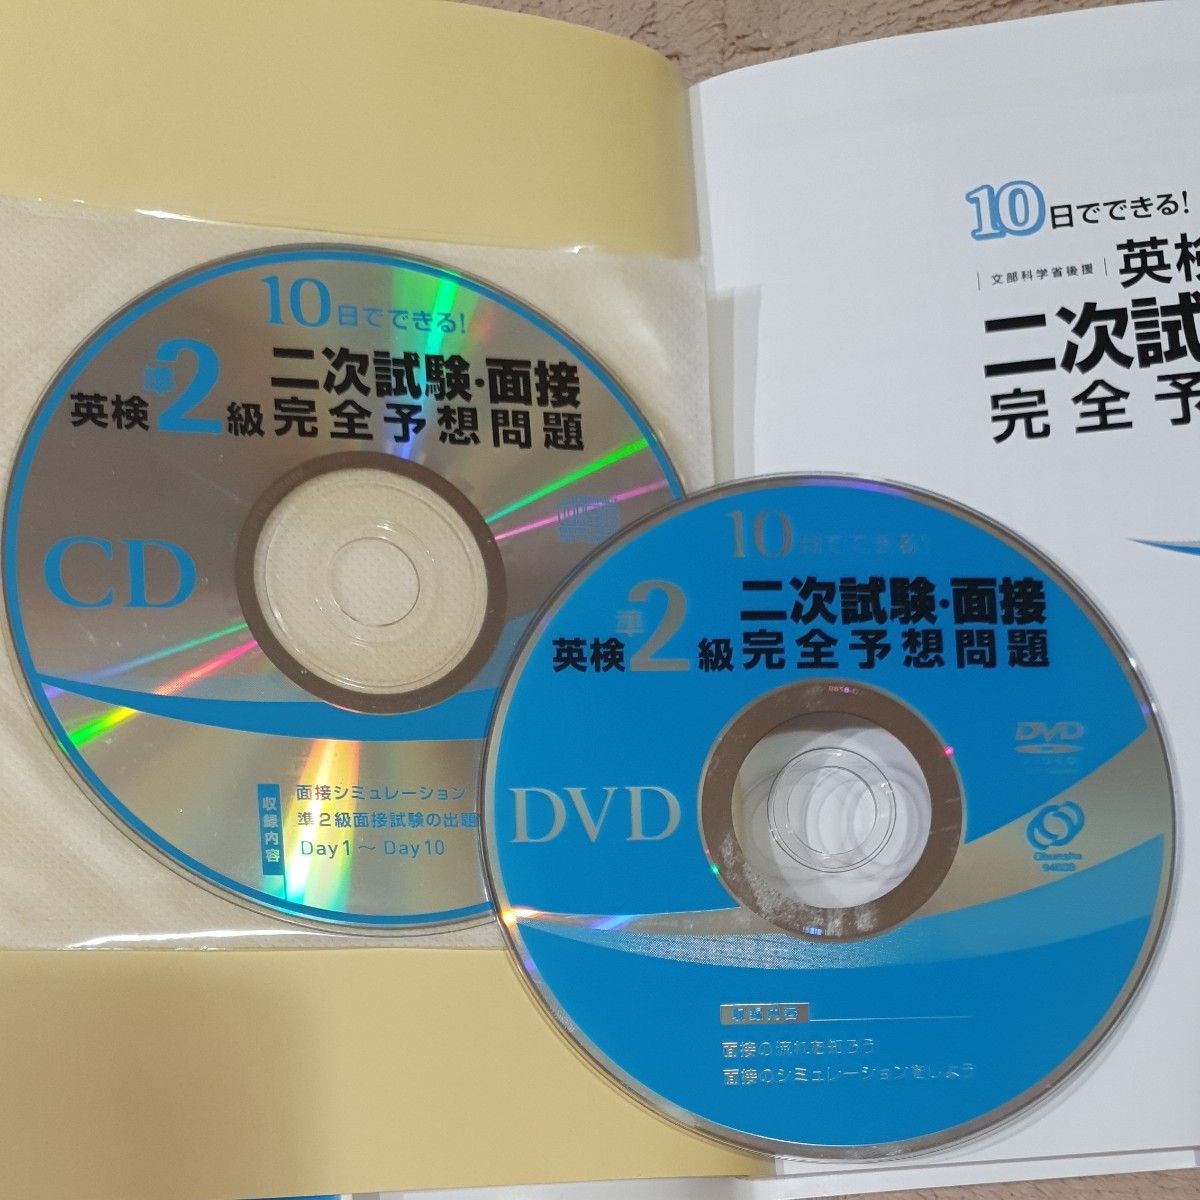 10日でできる 英検準2級 二次試験面接 完全予想問題 改訂版 (旺文社英検書) 英検準2級 CD+DVD